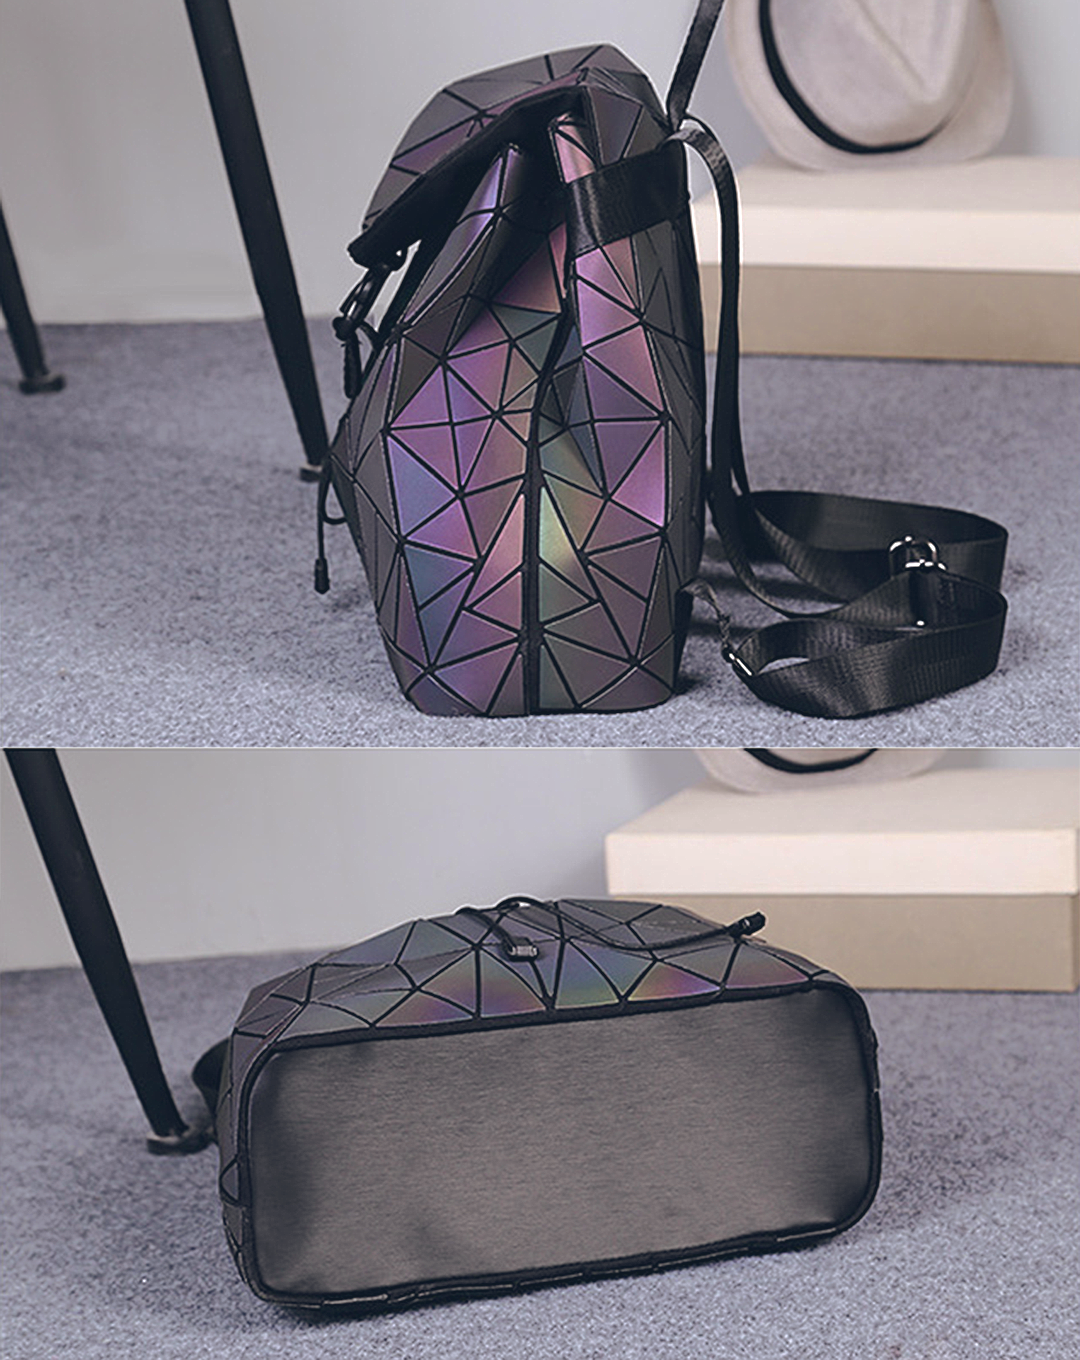 Geometric Pattern Backpack